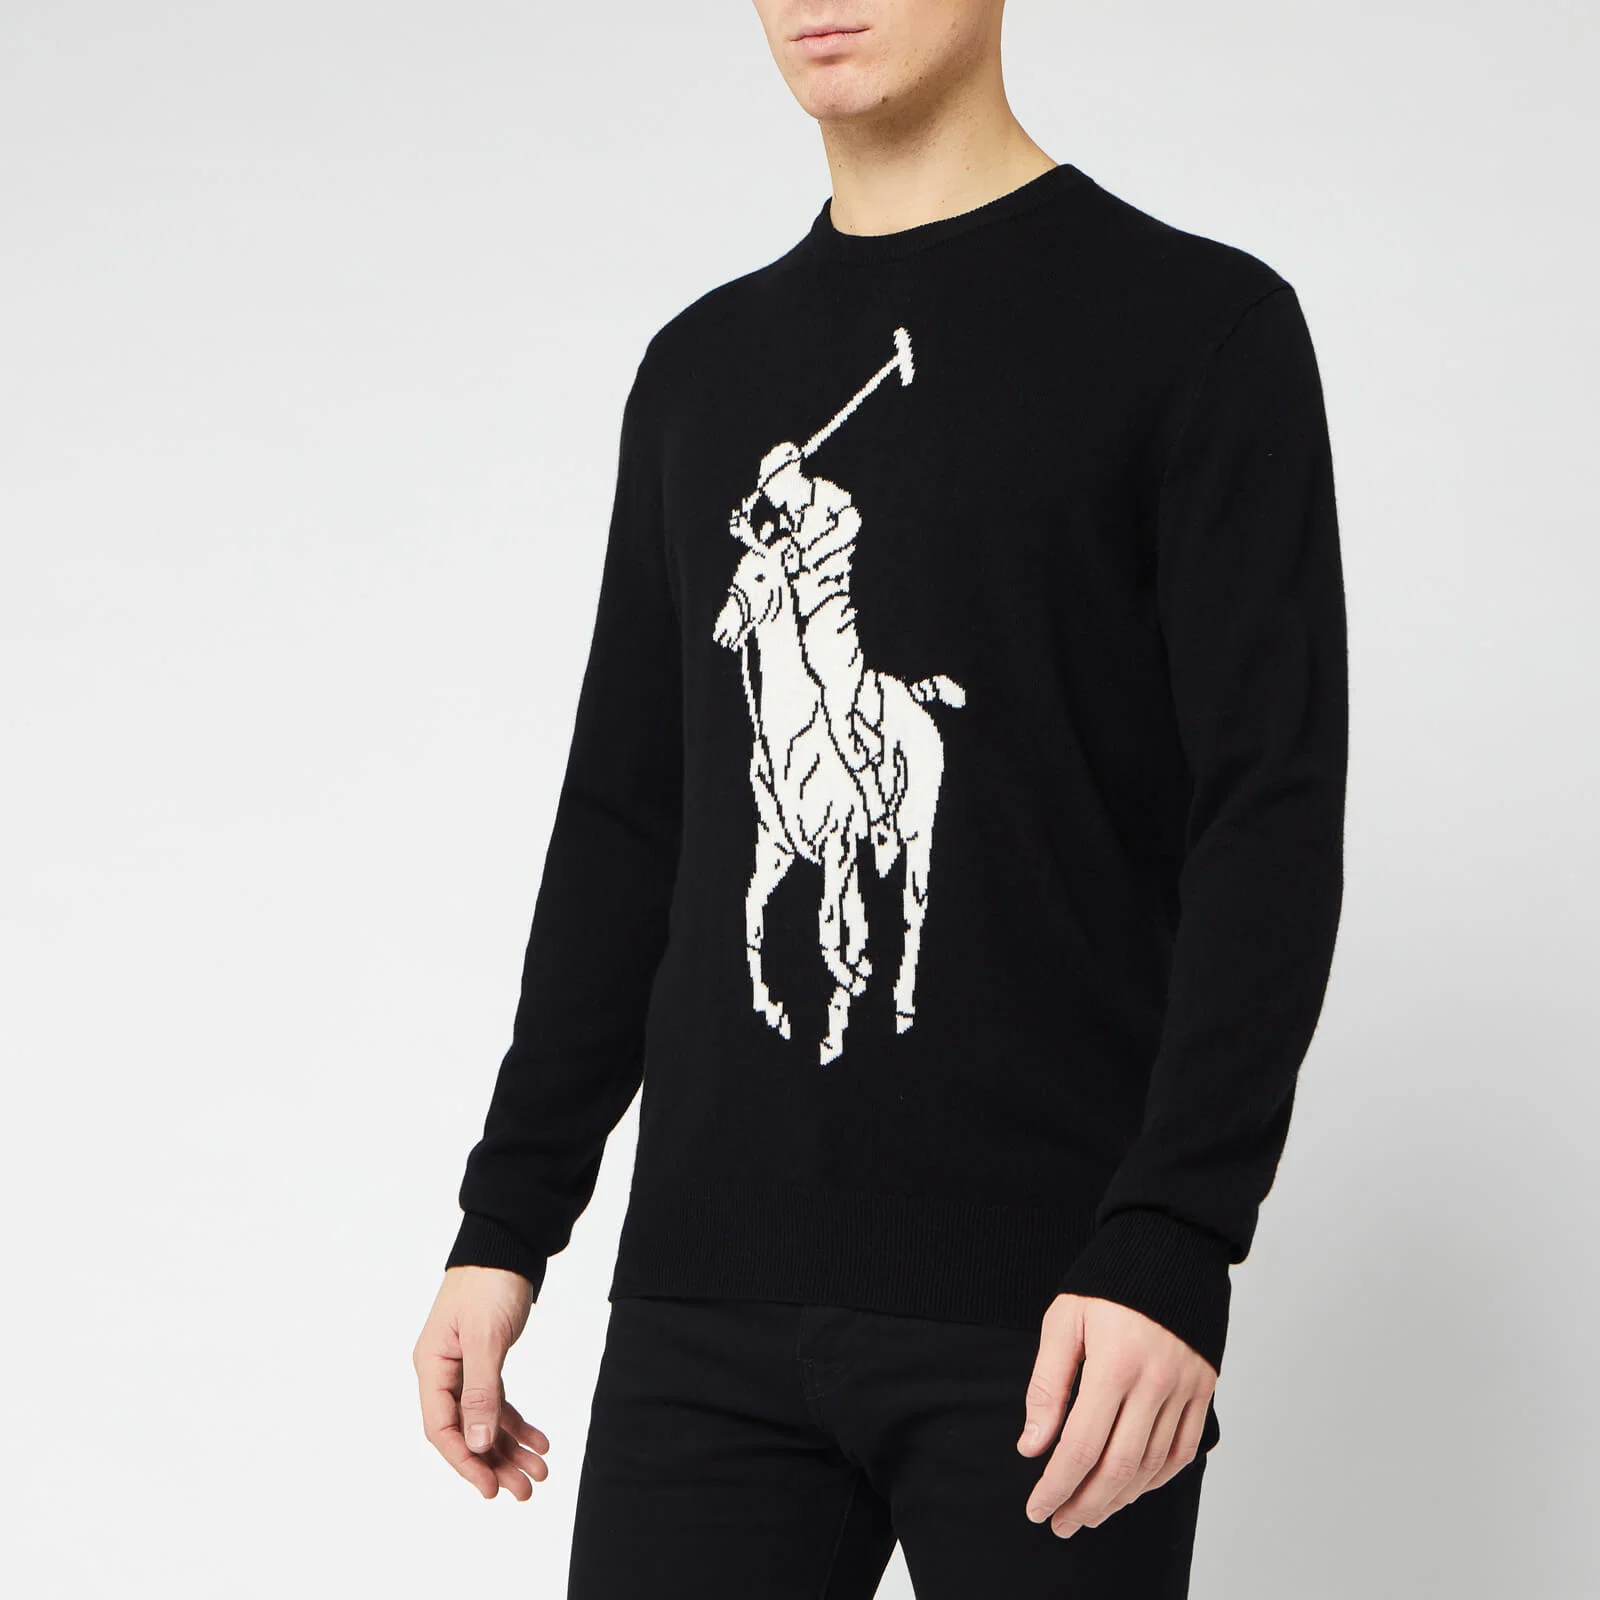 Polo Ralph Lauren Men's Loryelle Wool Big Pony Player Jumper - Black/White Image 1